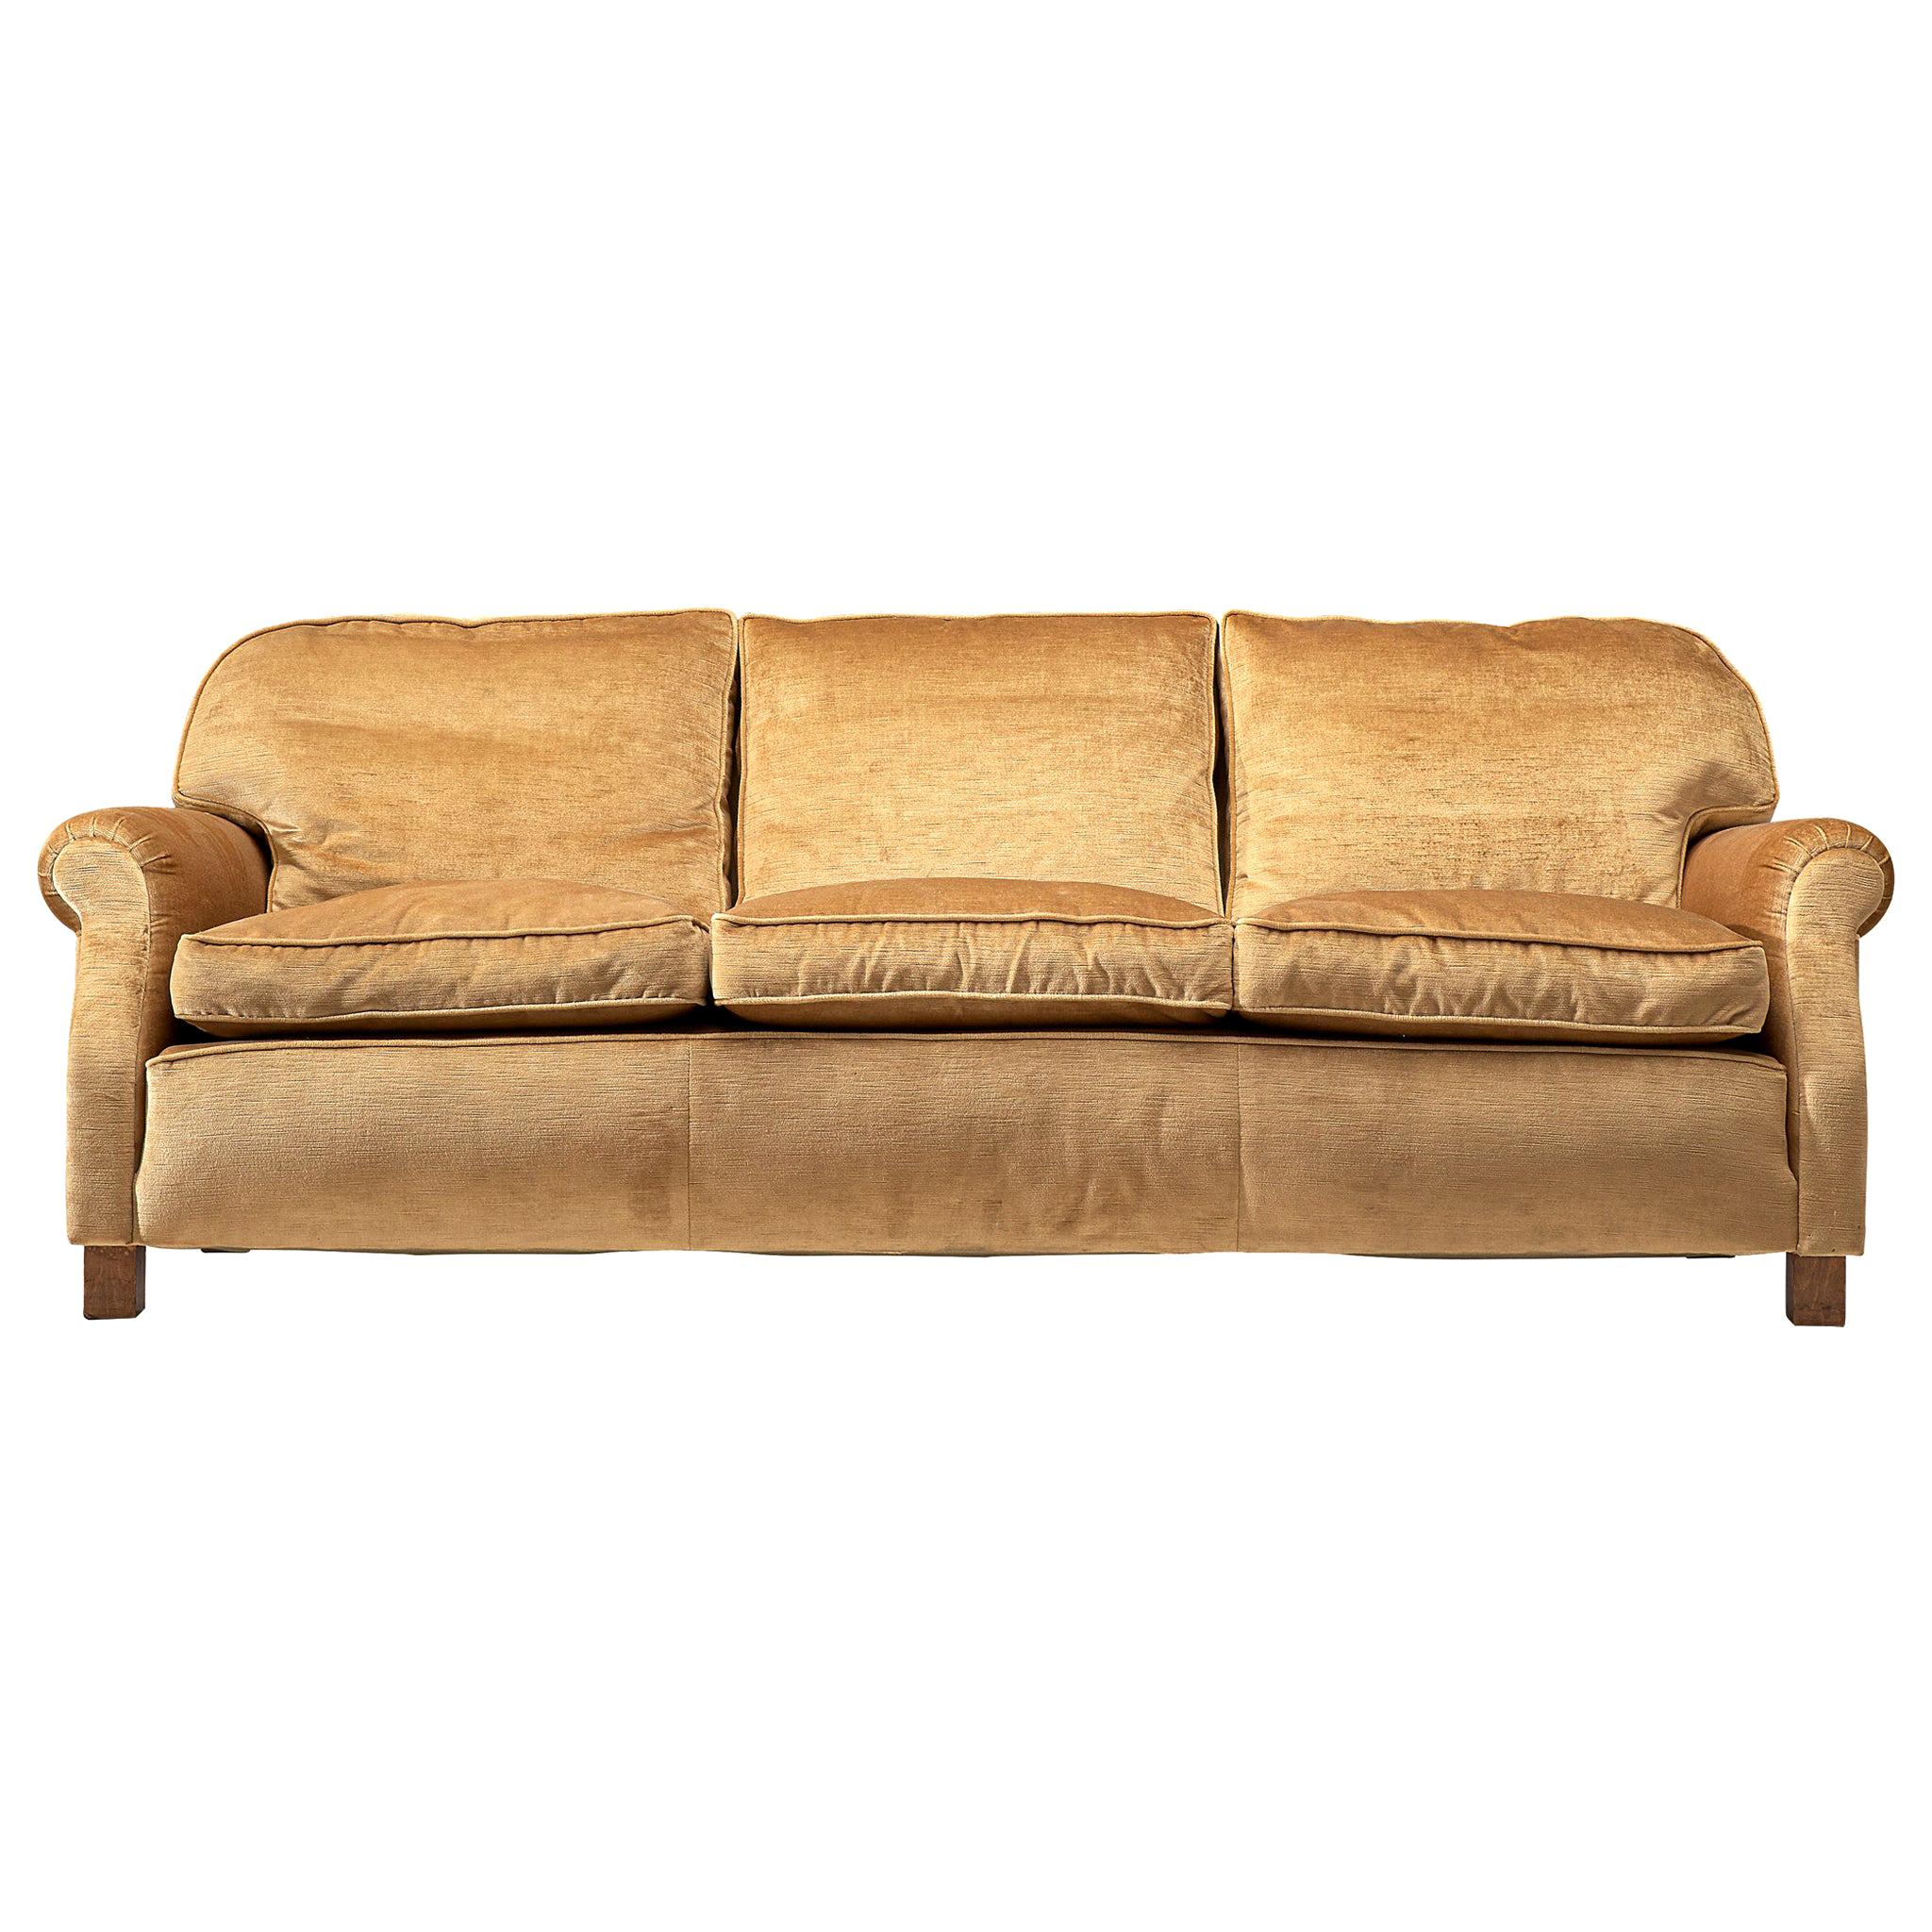 French Three-Seat Sofa in Beige Velvet